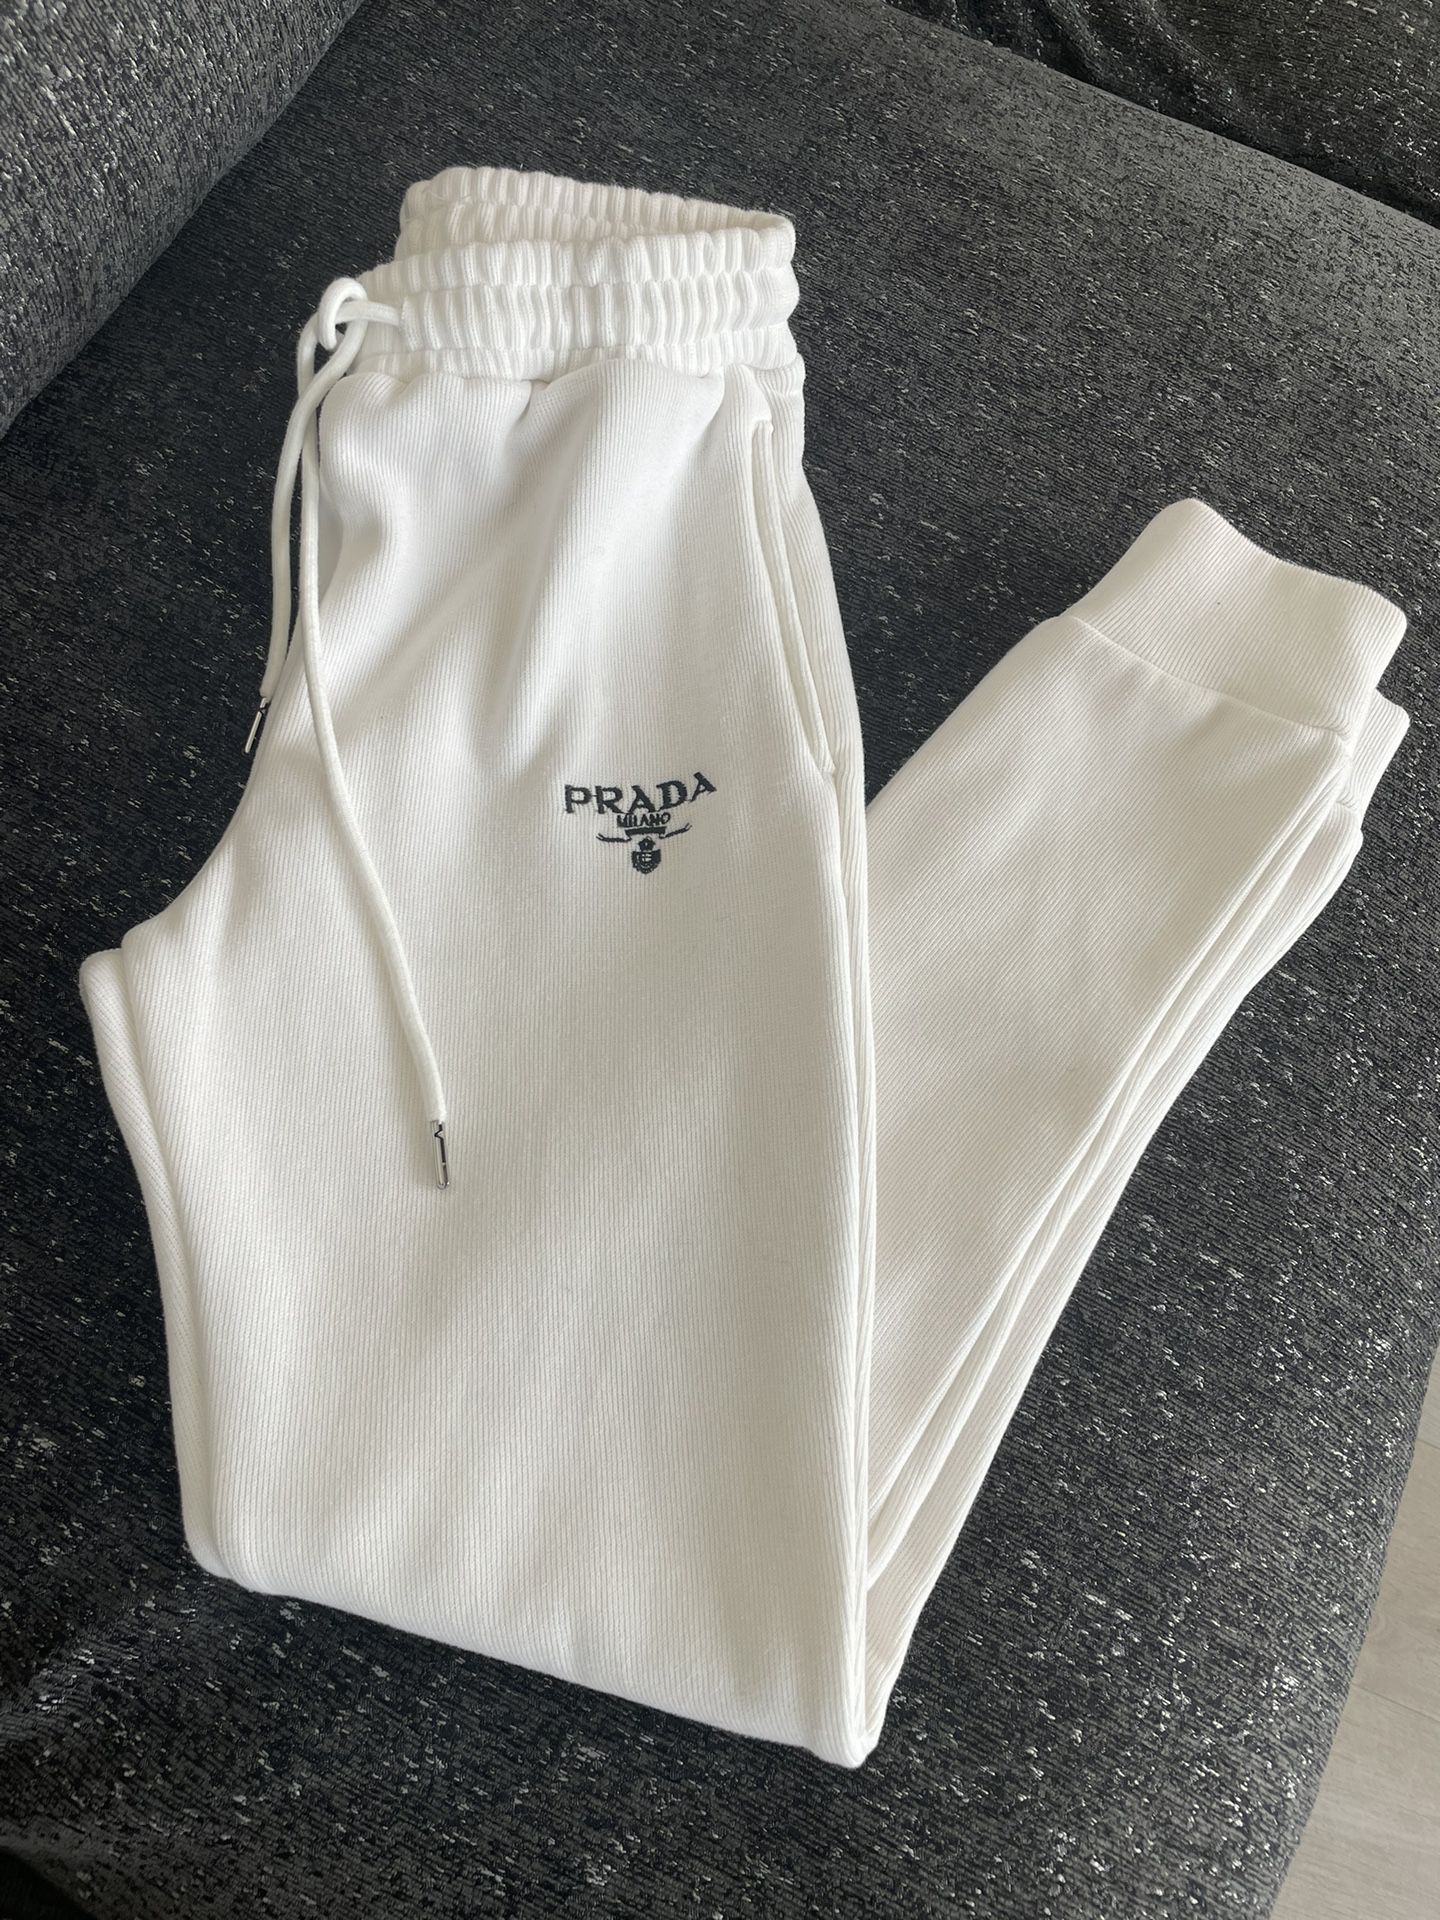 White Prada Sweatpants Slimfit Joggers - Size Small